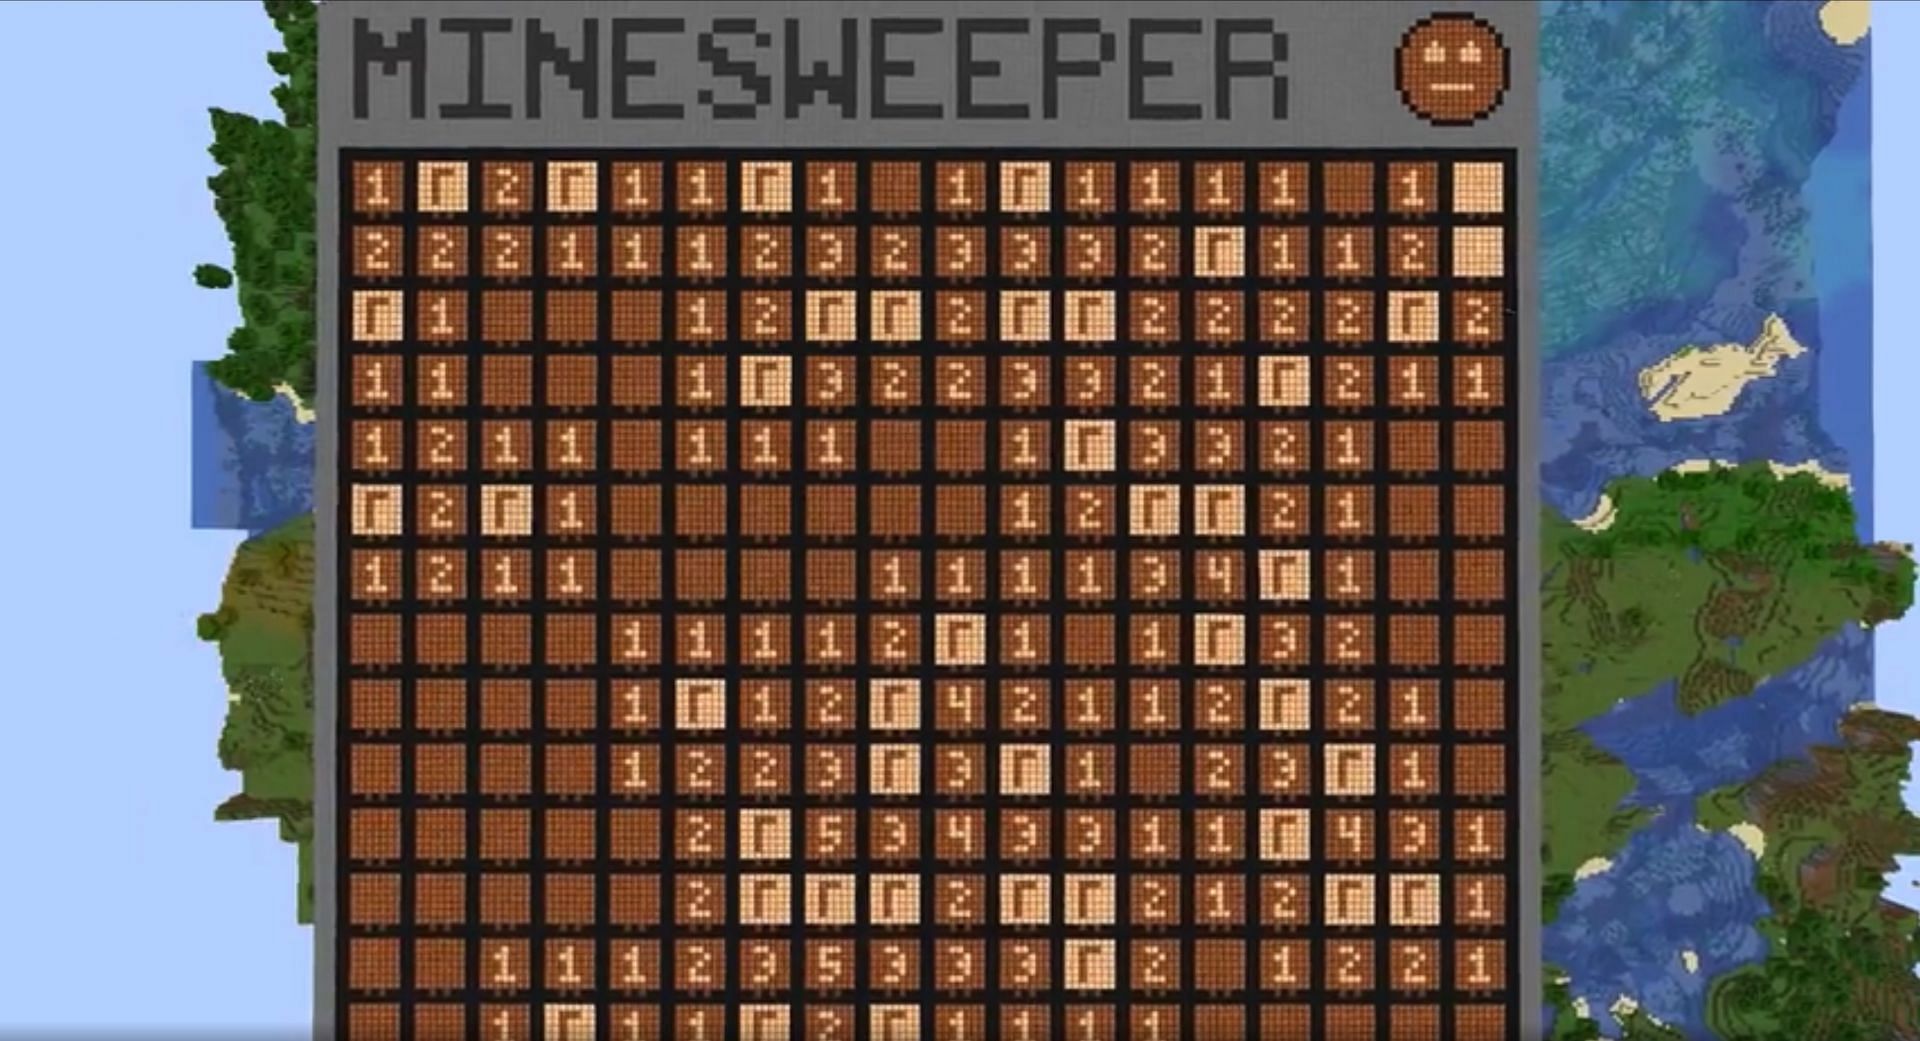 Minesweeper in Minecraft (image via u/mattbatwings on Reddit)